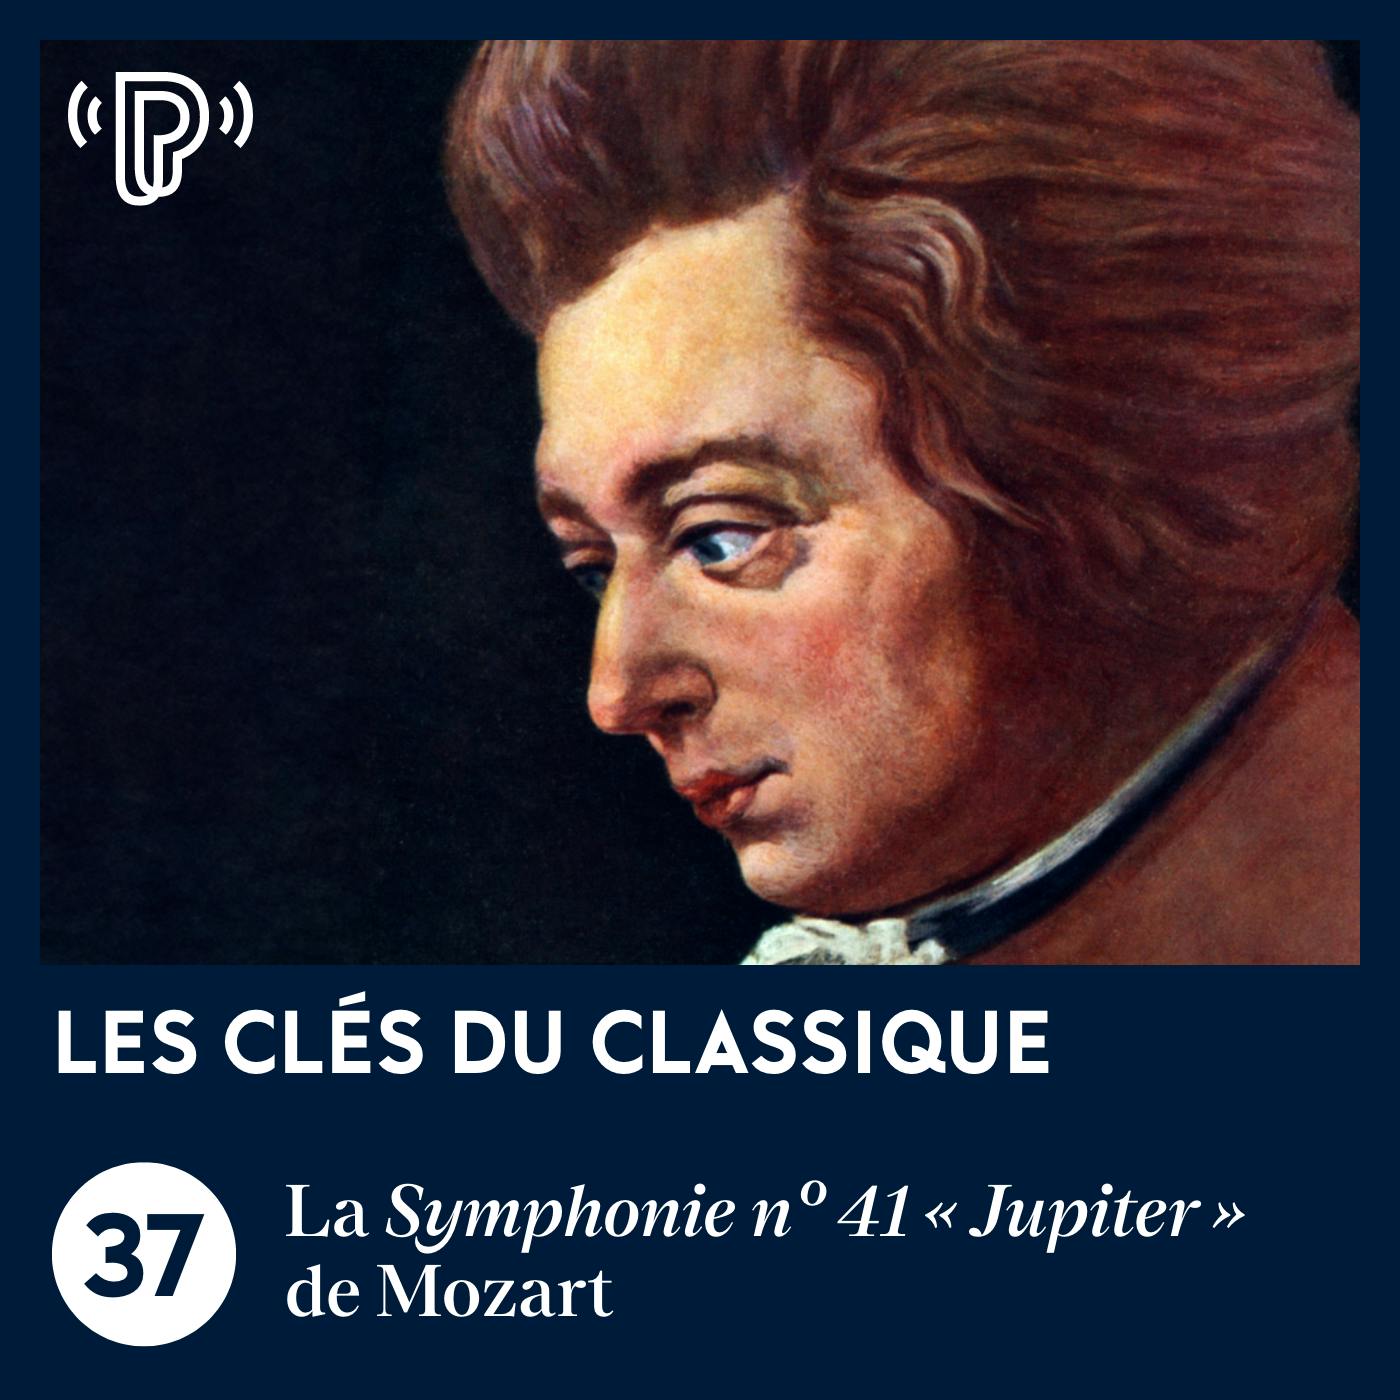 La Symphonie n° 41 « Jupiter » de Mozart | Les Clés du classique #37